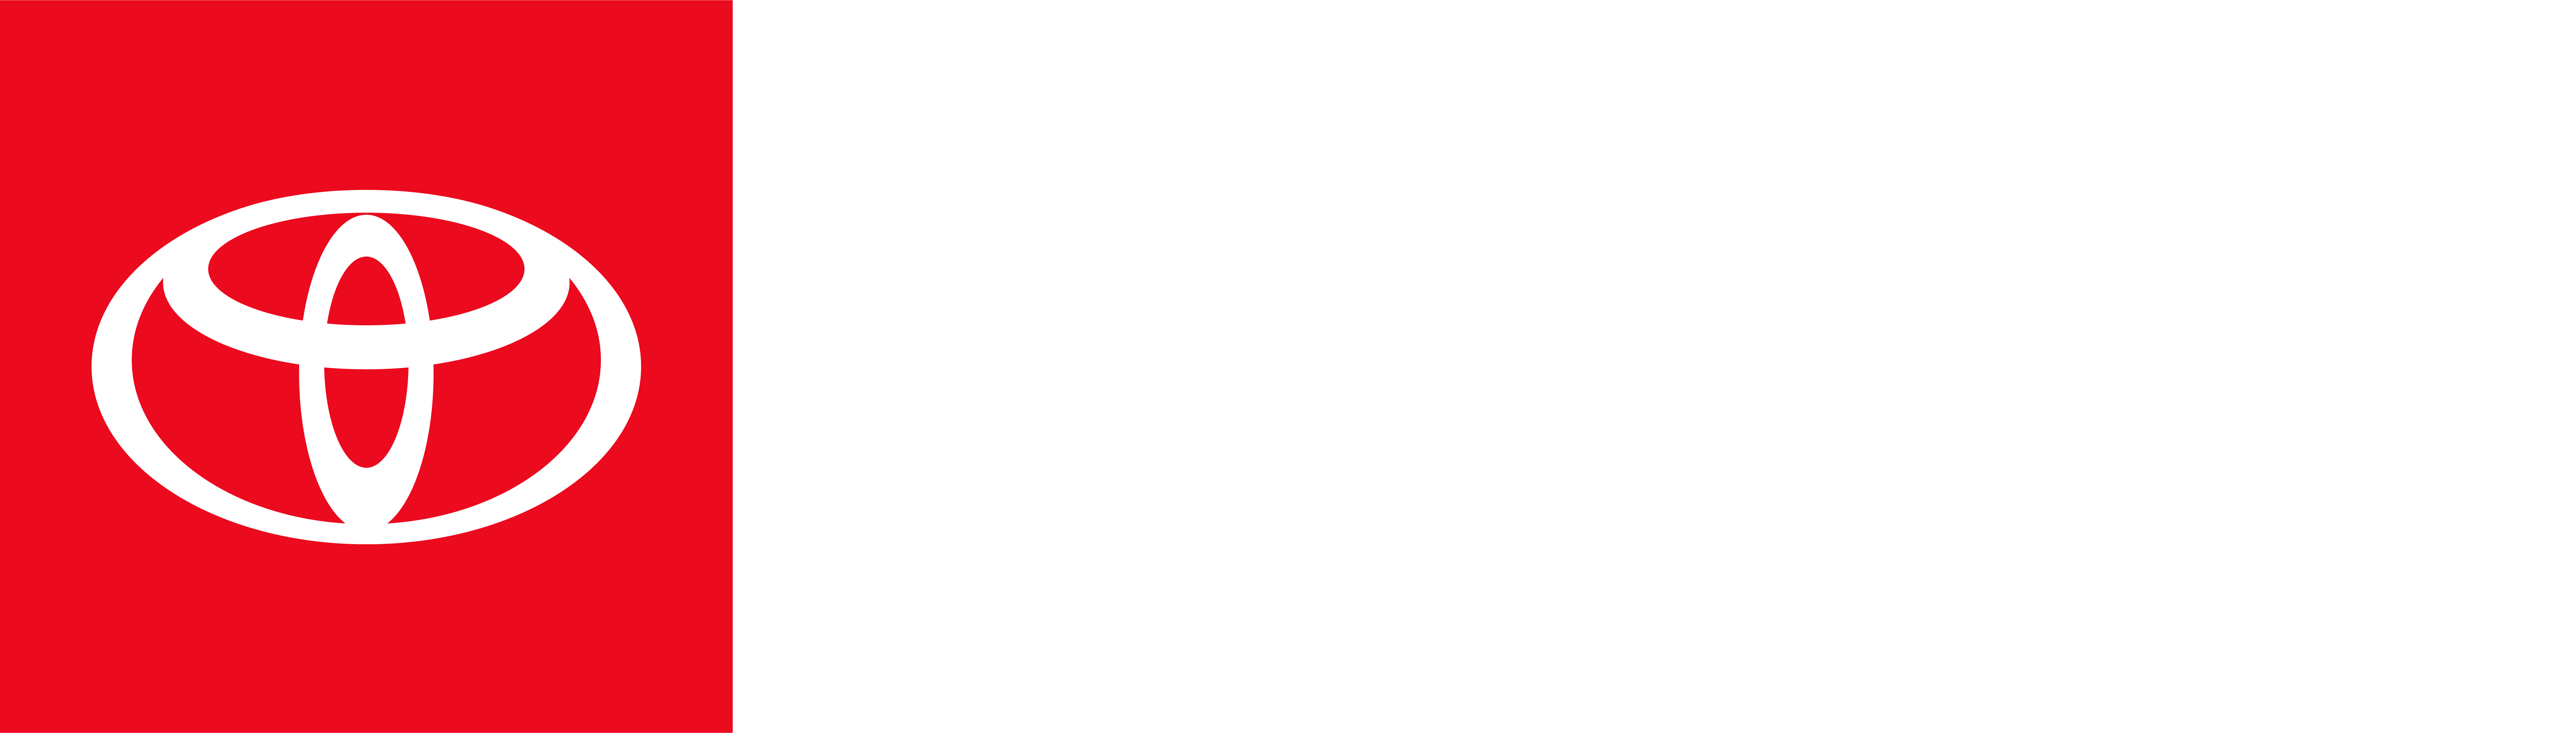 Toyota Brake Savings Event